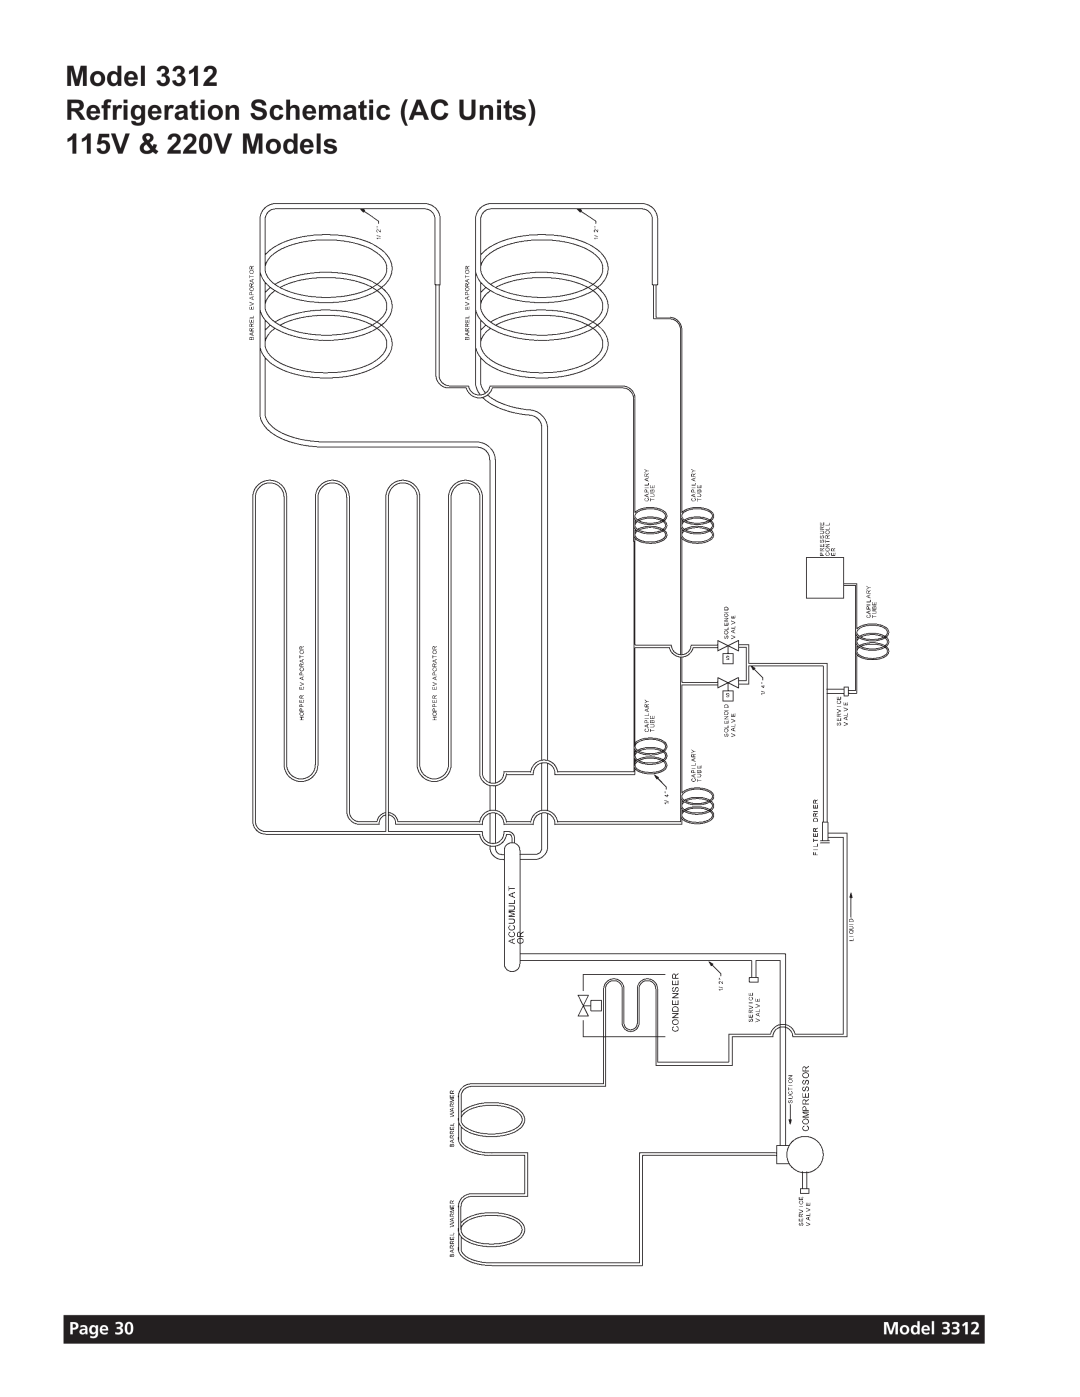 Grindmaster 3311 manual Model Refrigeration Schematic AC Units, 115V & 220V Models, Page 